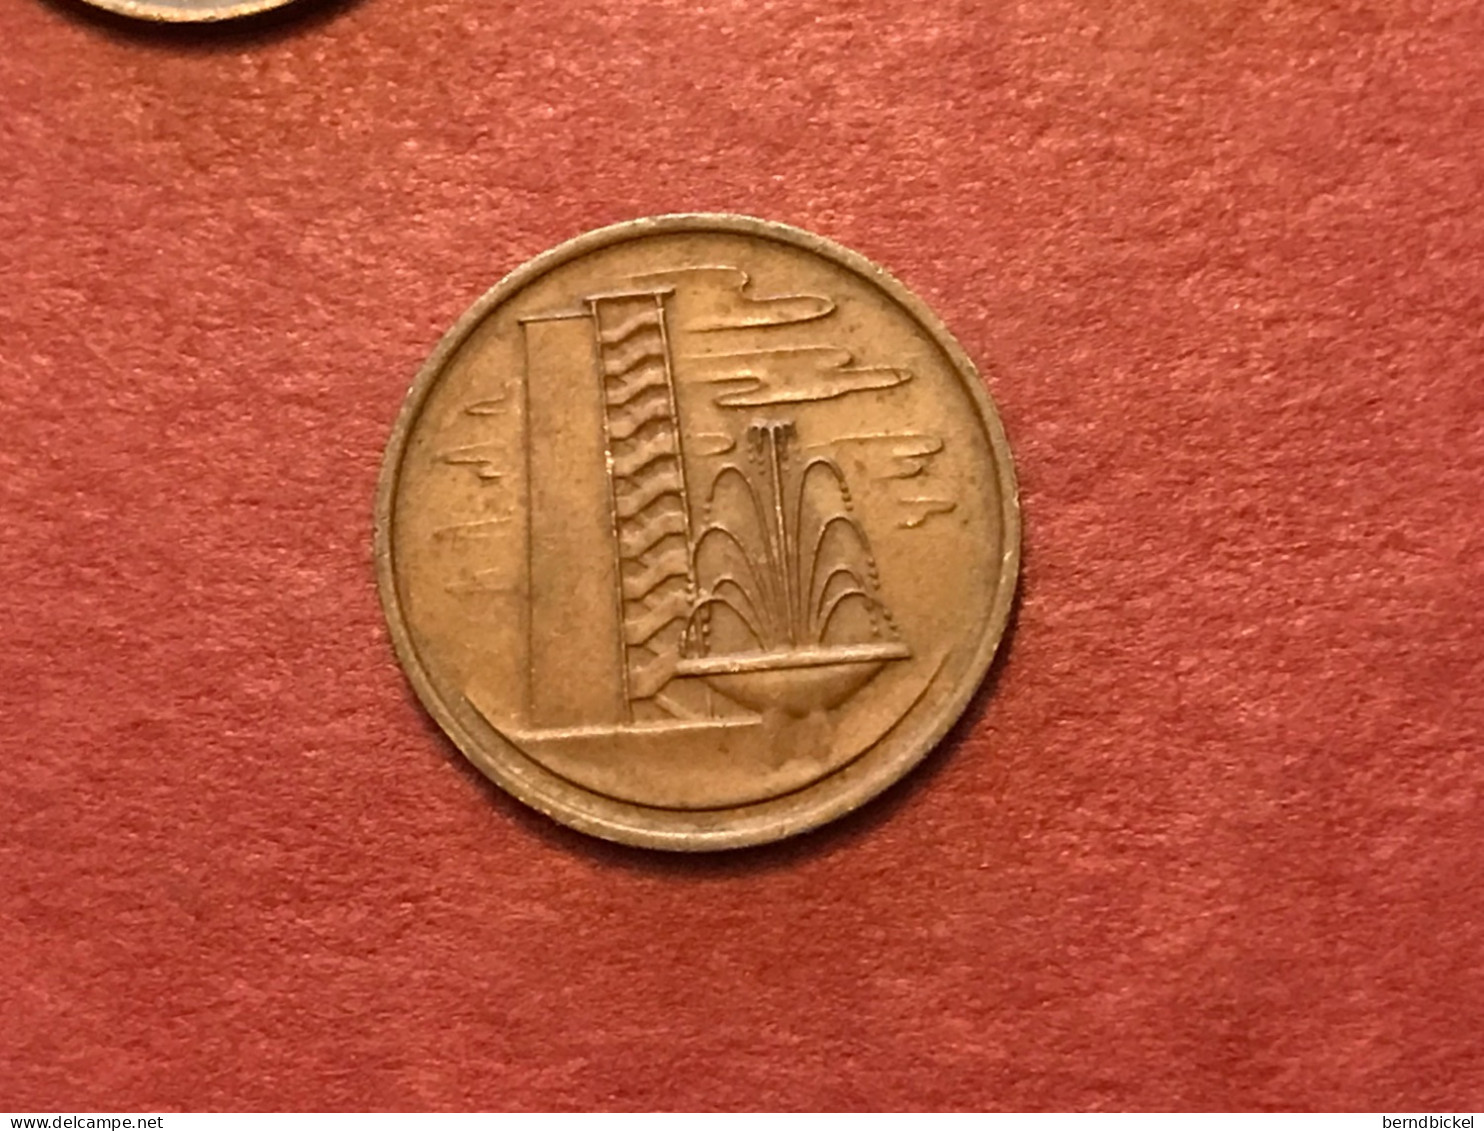 Münze Münzen Umlaufmünze Singapur 1 Cent 1968 - Singapur